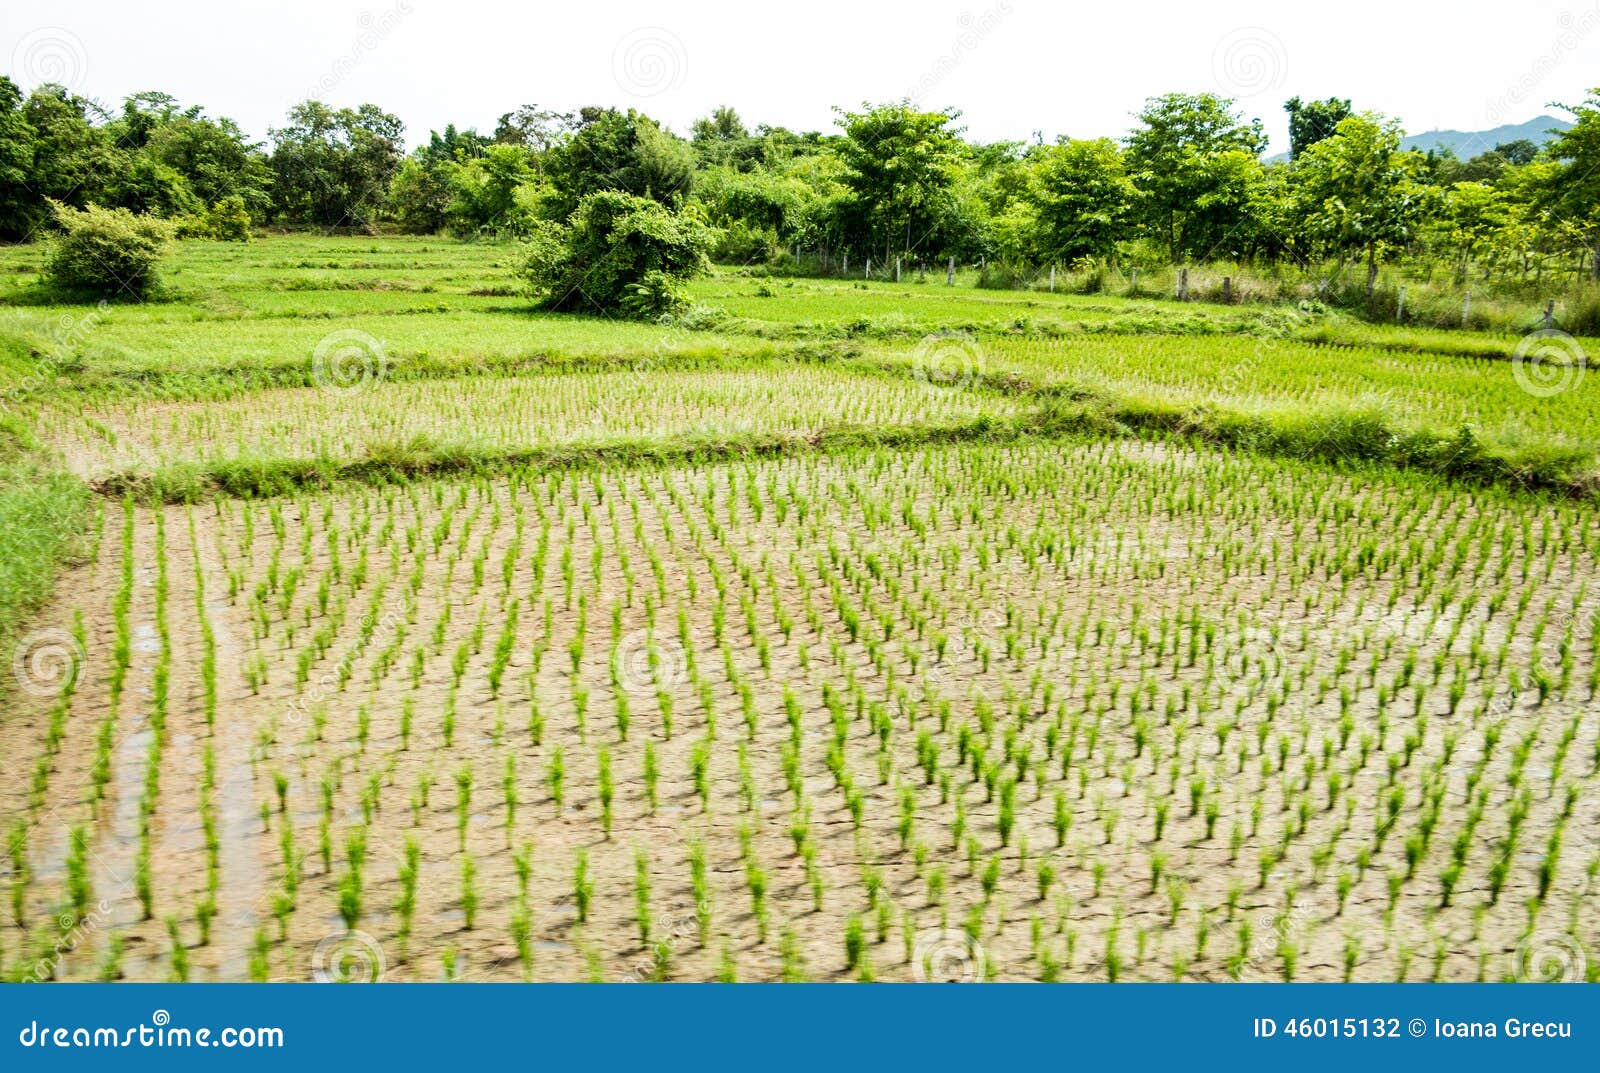 rice field chiang mai plantation thailand 46015132